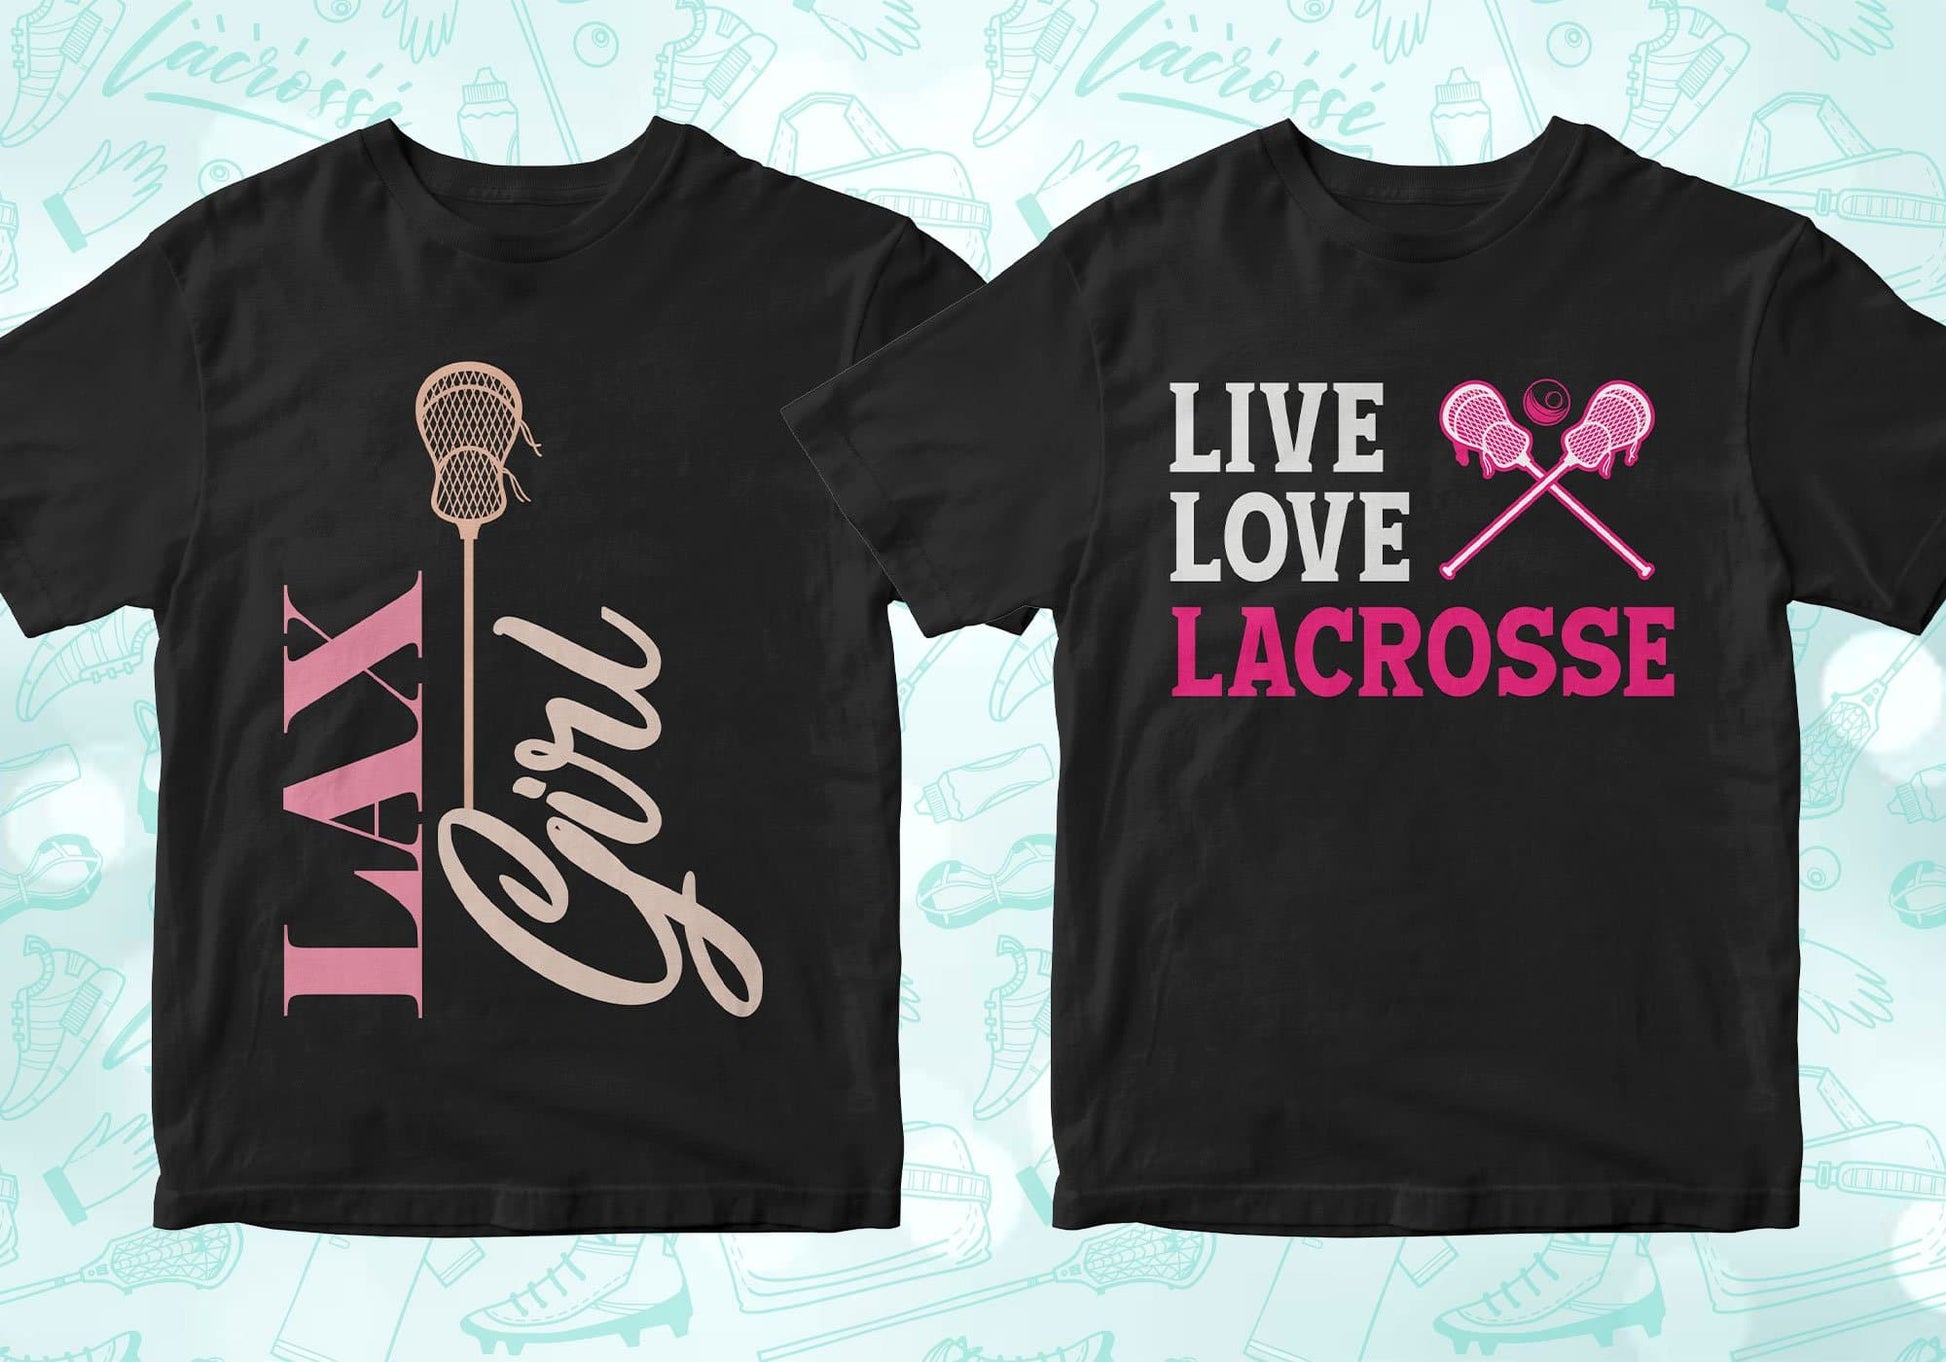 lax girl, live love lacrosse, lacrosse shirts lacrosse tshirt lacrosse t shirts lacrosse shirt designs lacrosse graphic